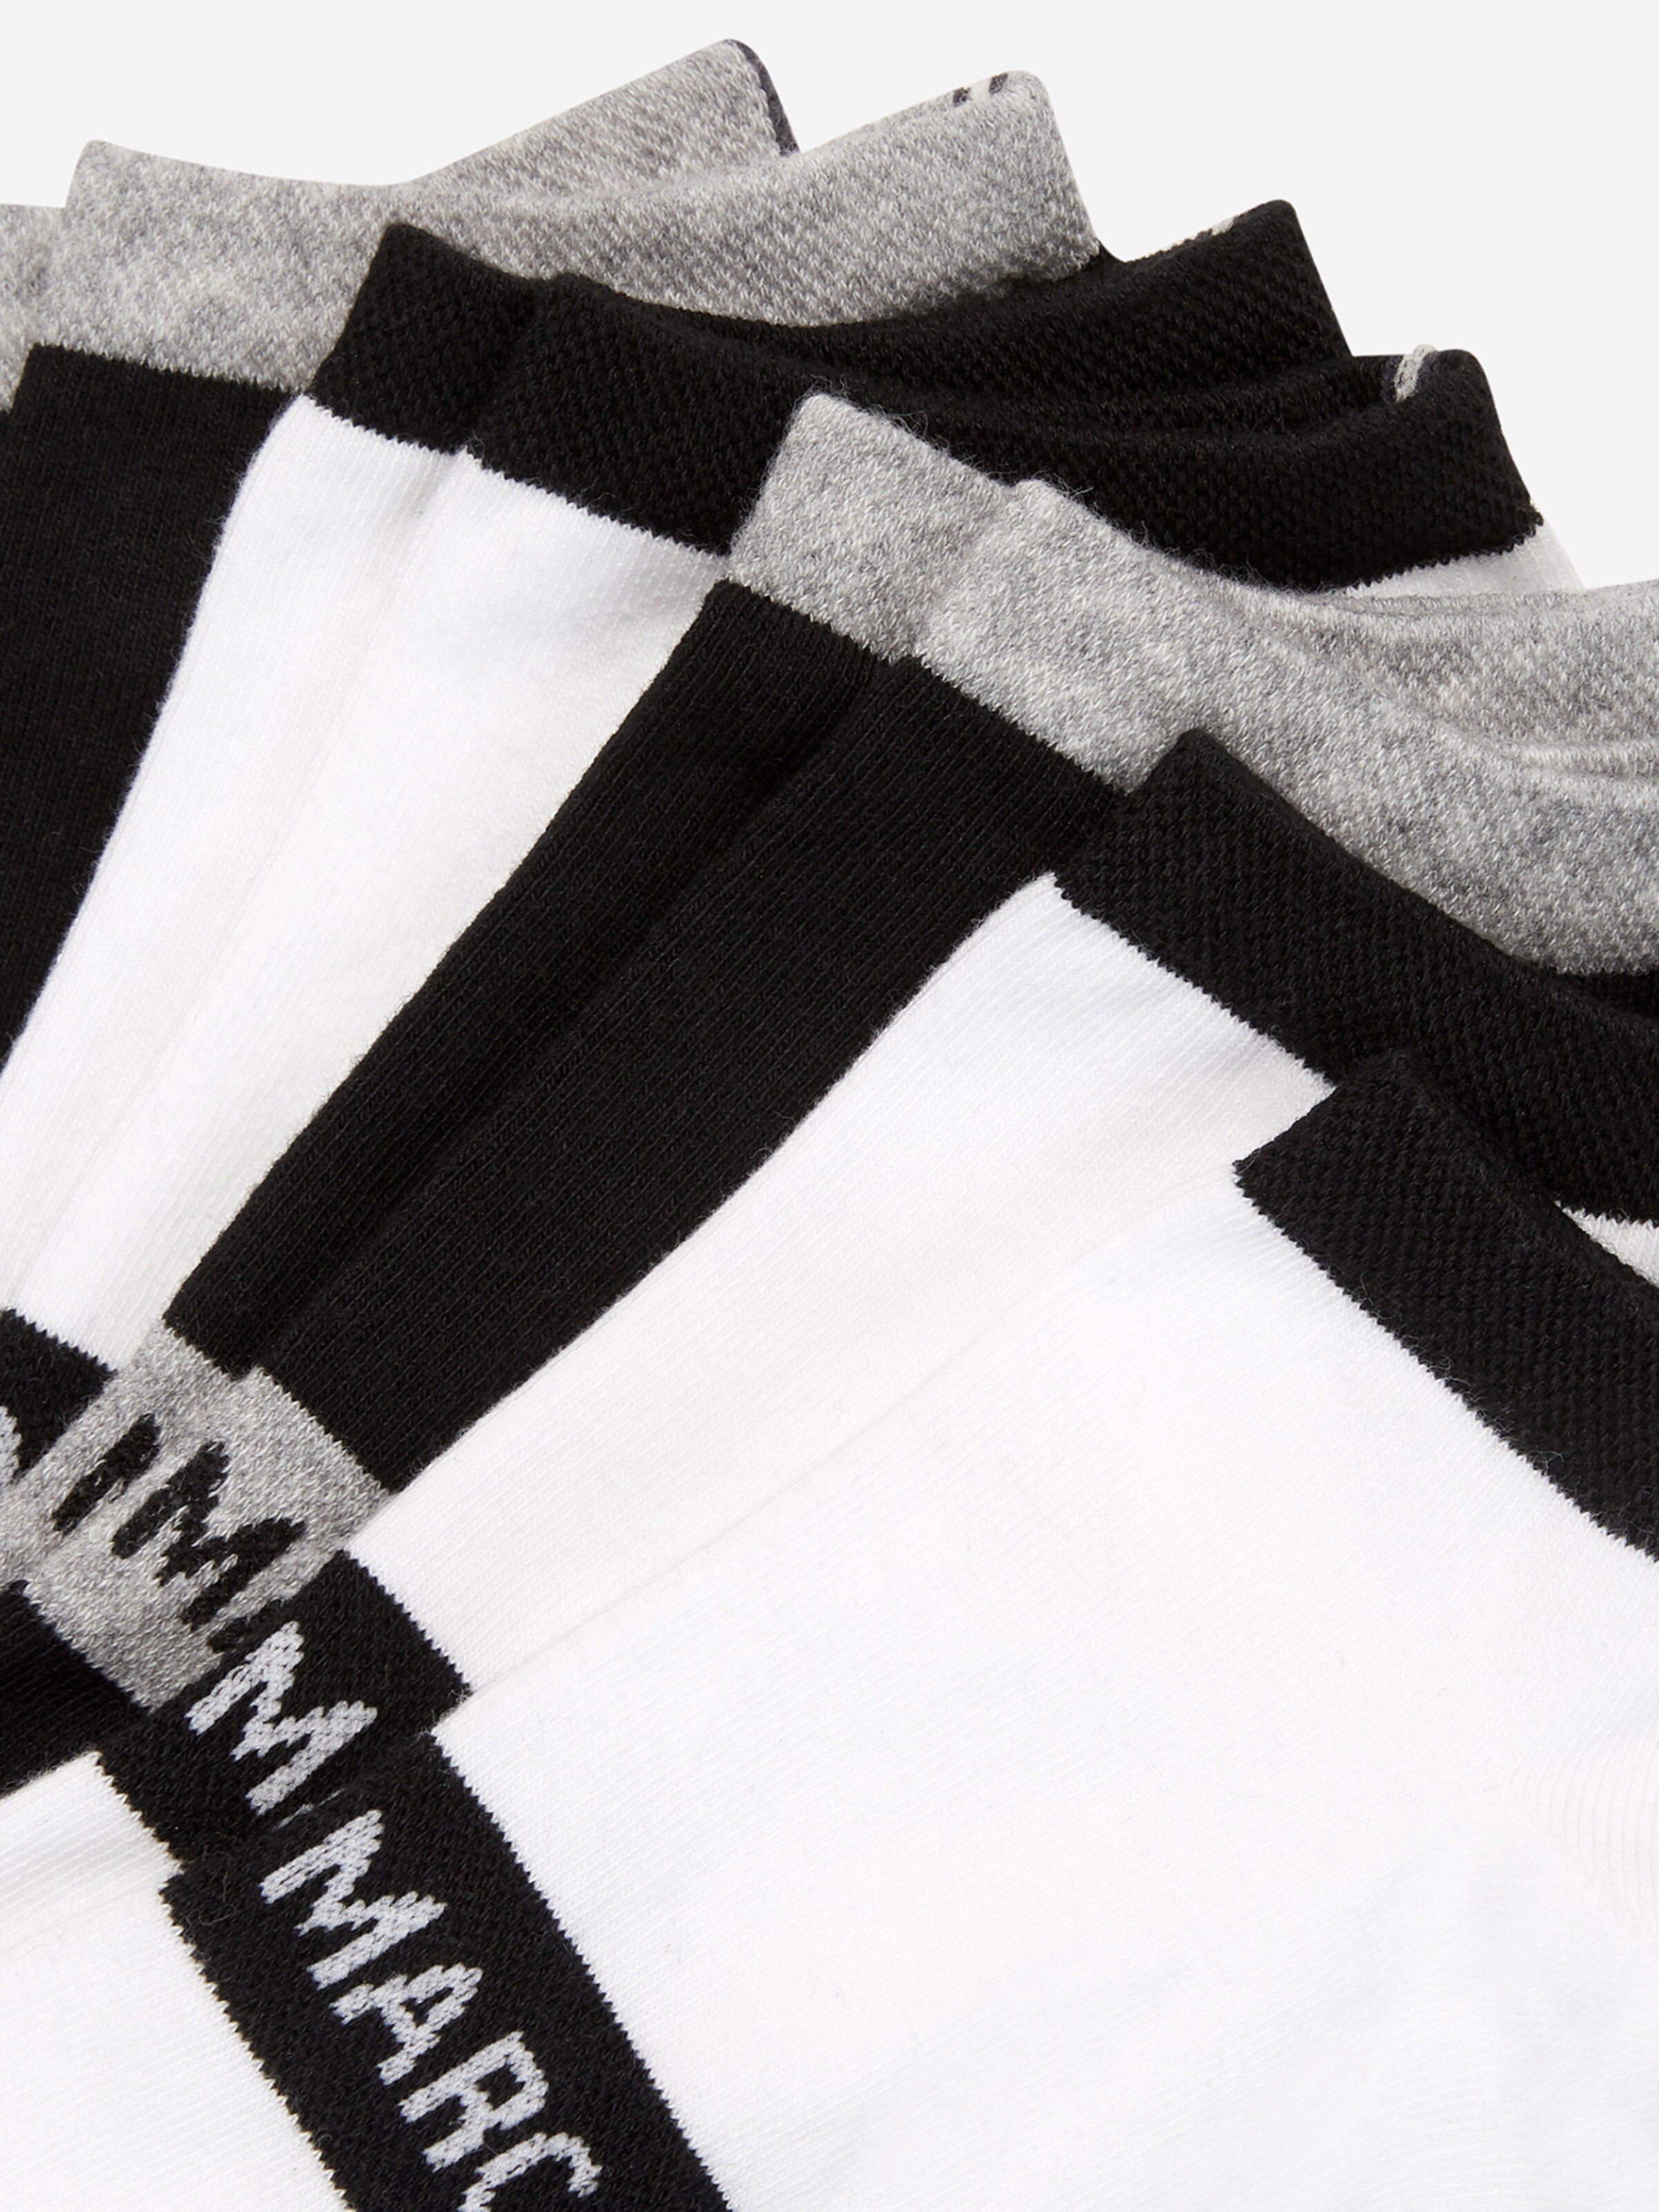 Männer Wäsche Marc O'Polo Sneakersocken ' 8er-Pack Low Cuts Black & White ' in Schwarz, Weiß - ZE34554